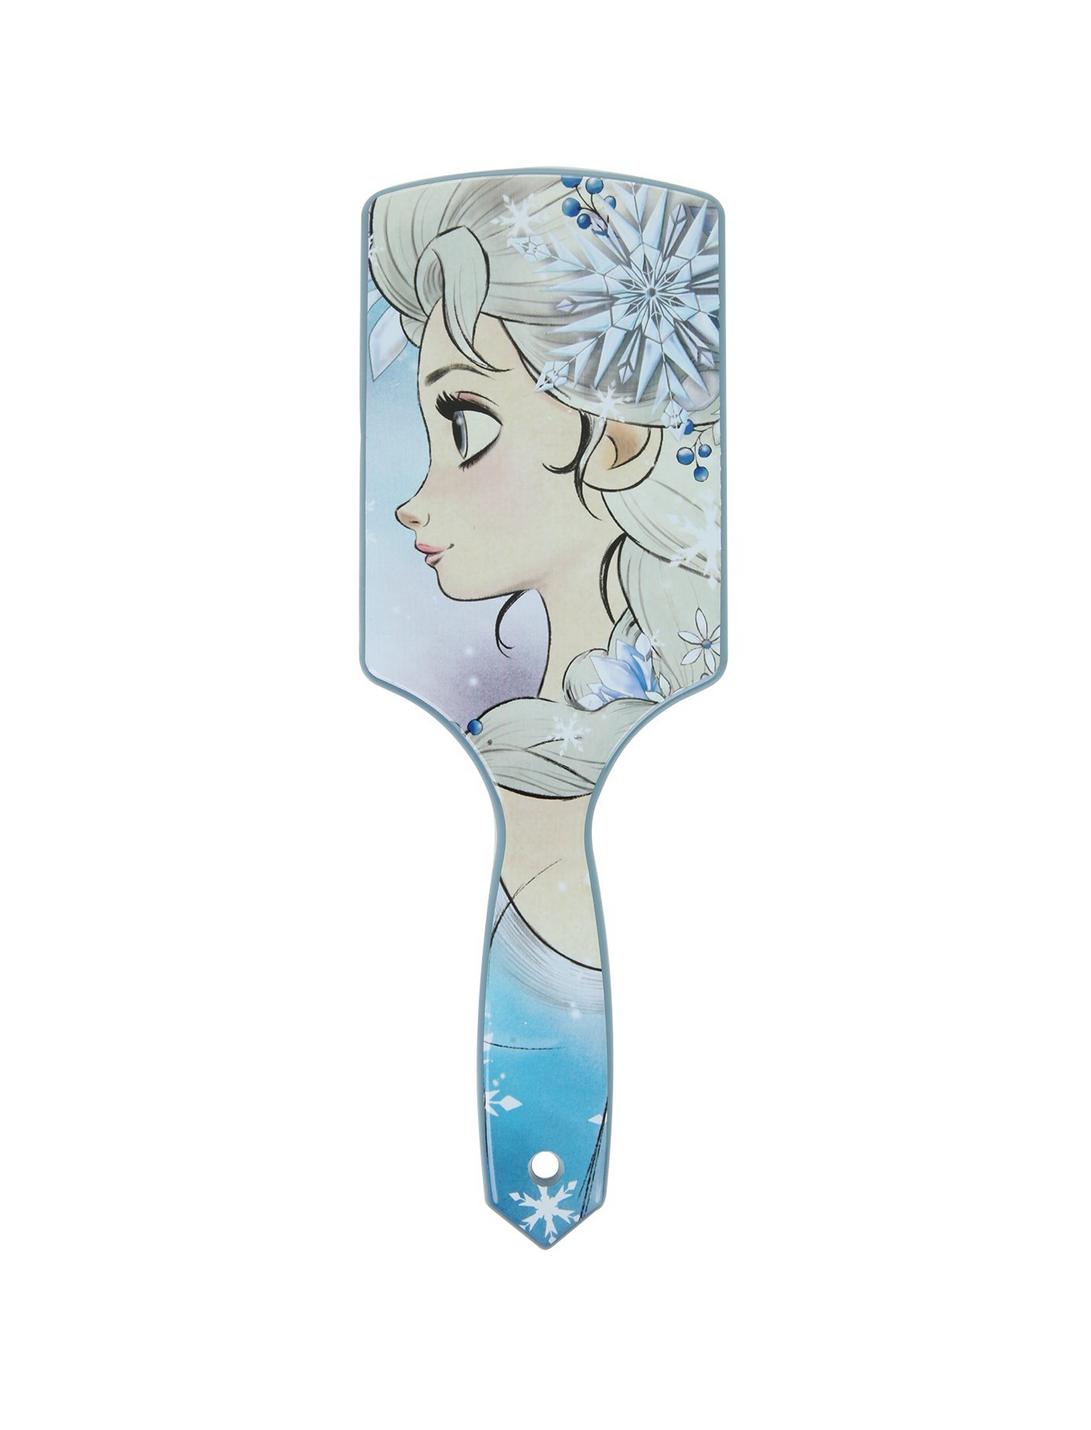 Disney Frozen Elsa Sparkle Hairbrush, , hi-res